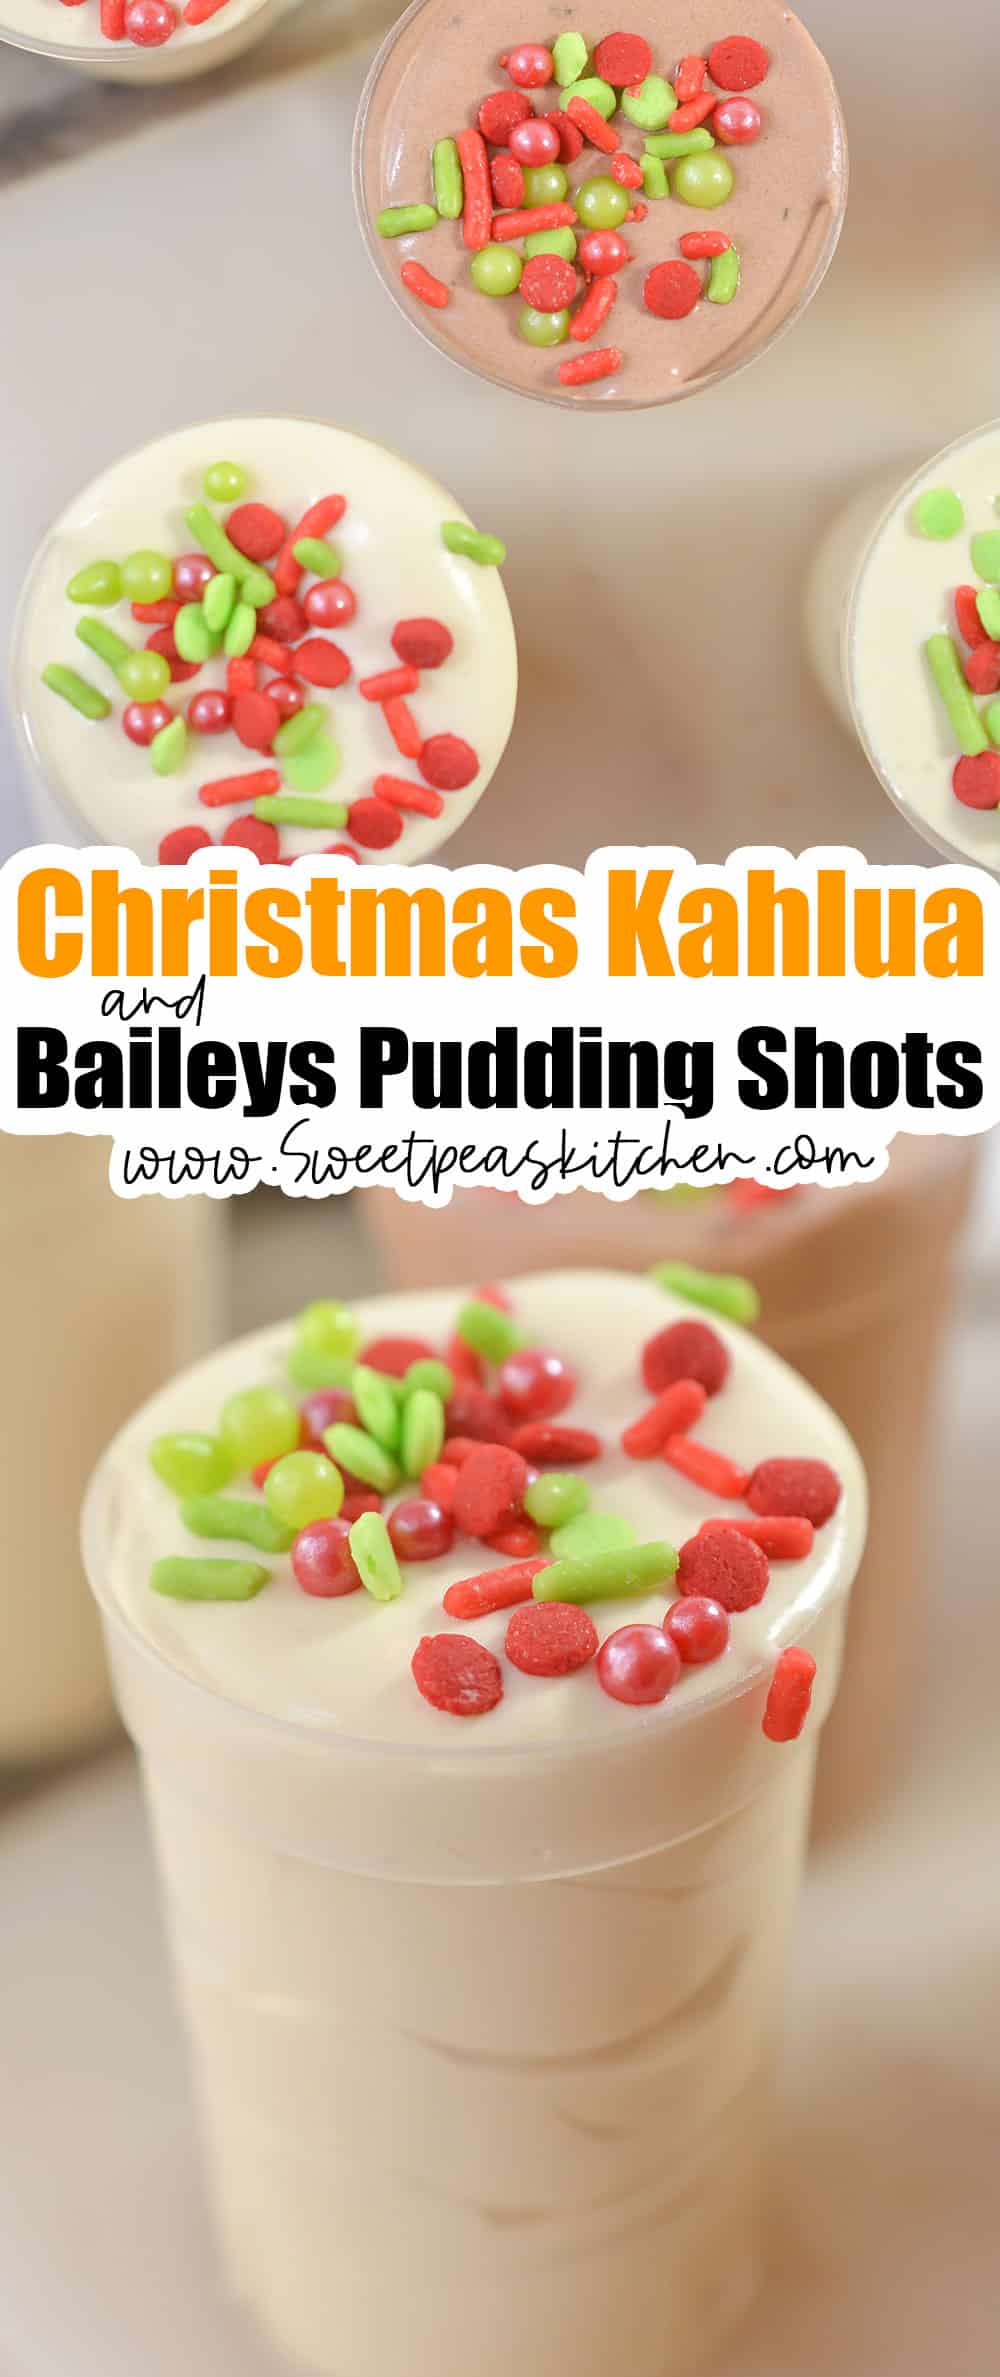 baileys pudding shots on pinteerst